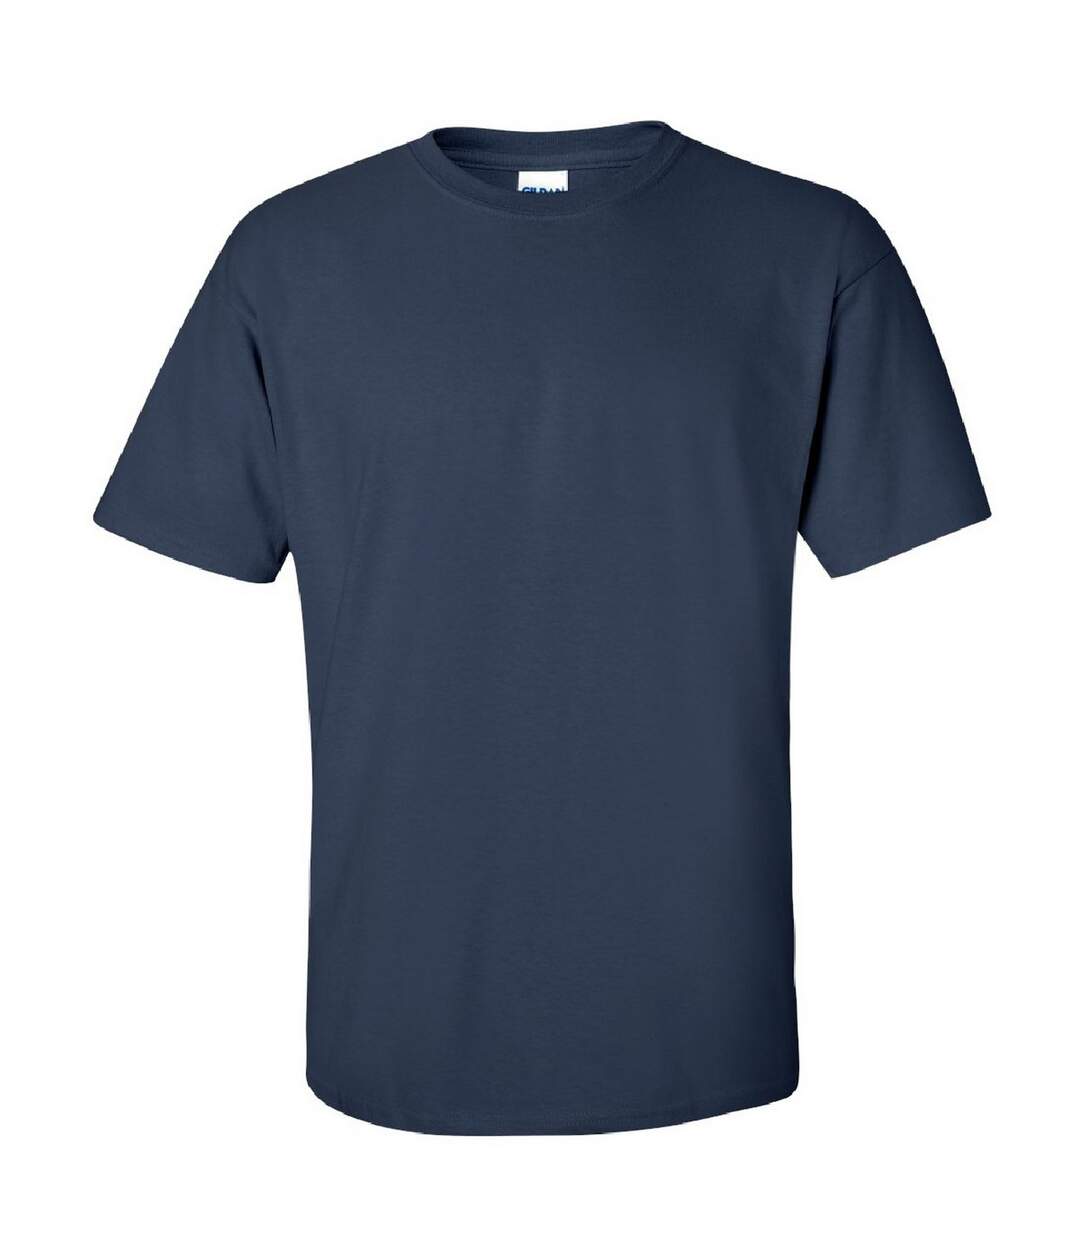 Gildan - T-shirt à manches courtes - Homme (Bleu marine) - UTBC475